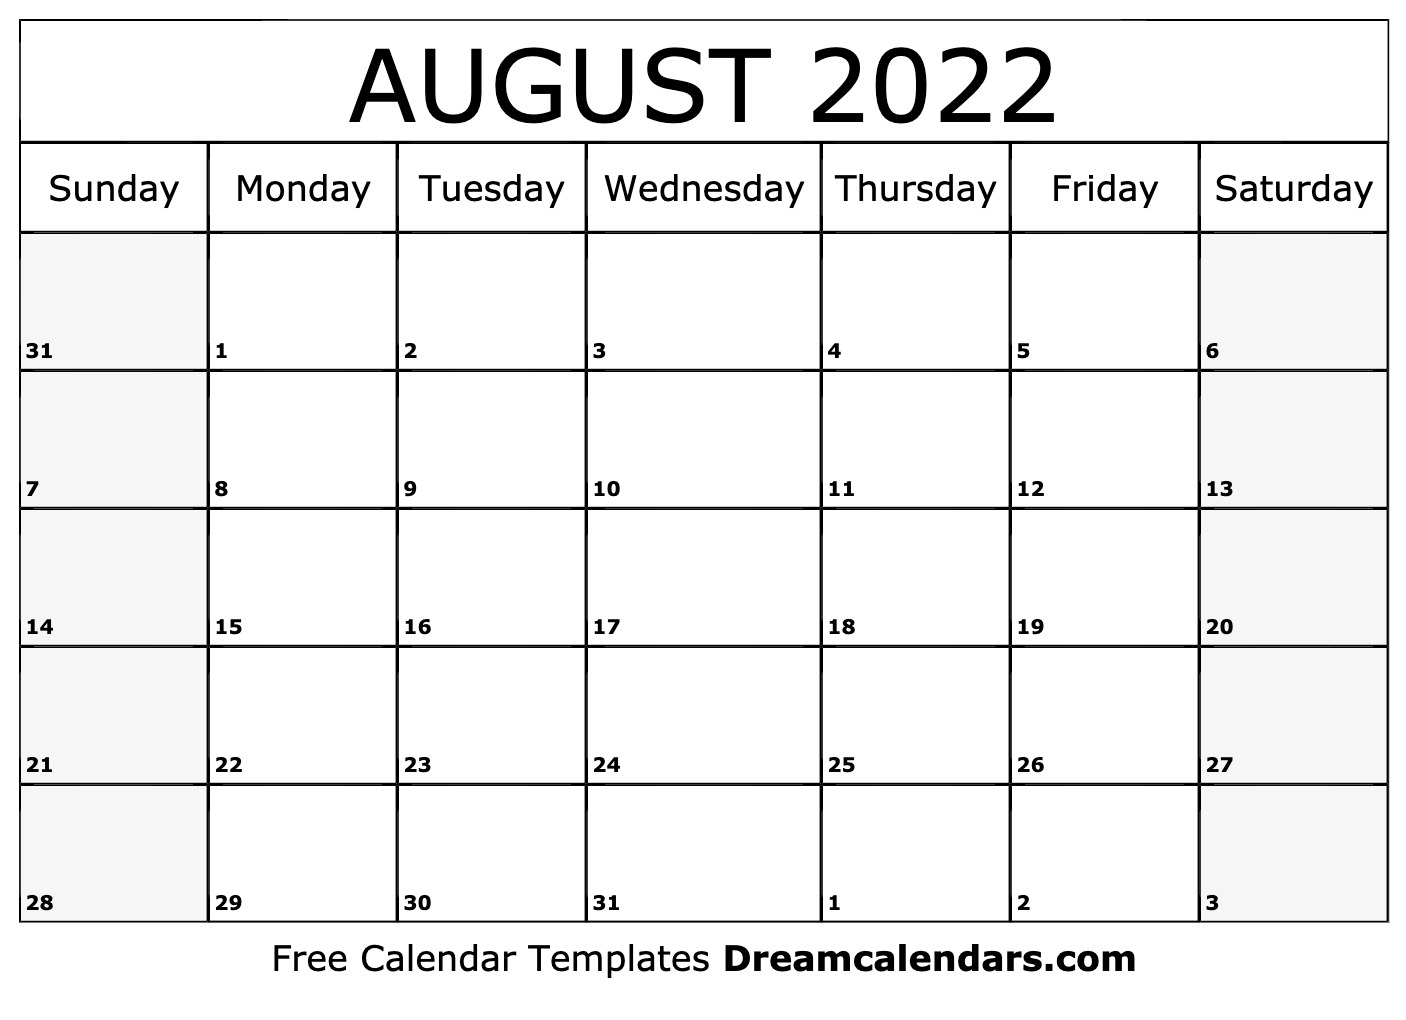 August 2022 Calendar Printable Free - November Calendar 2022